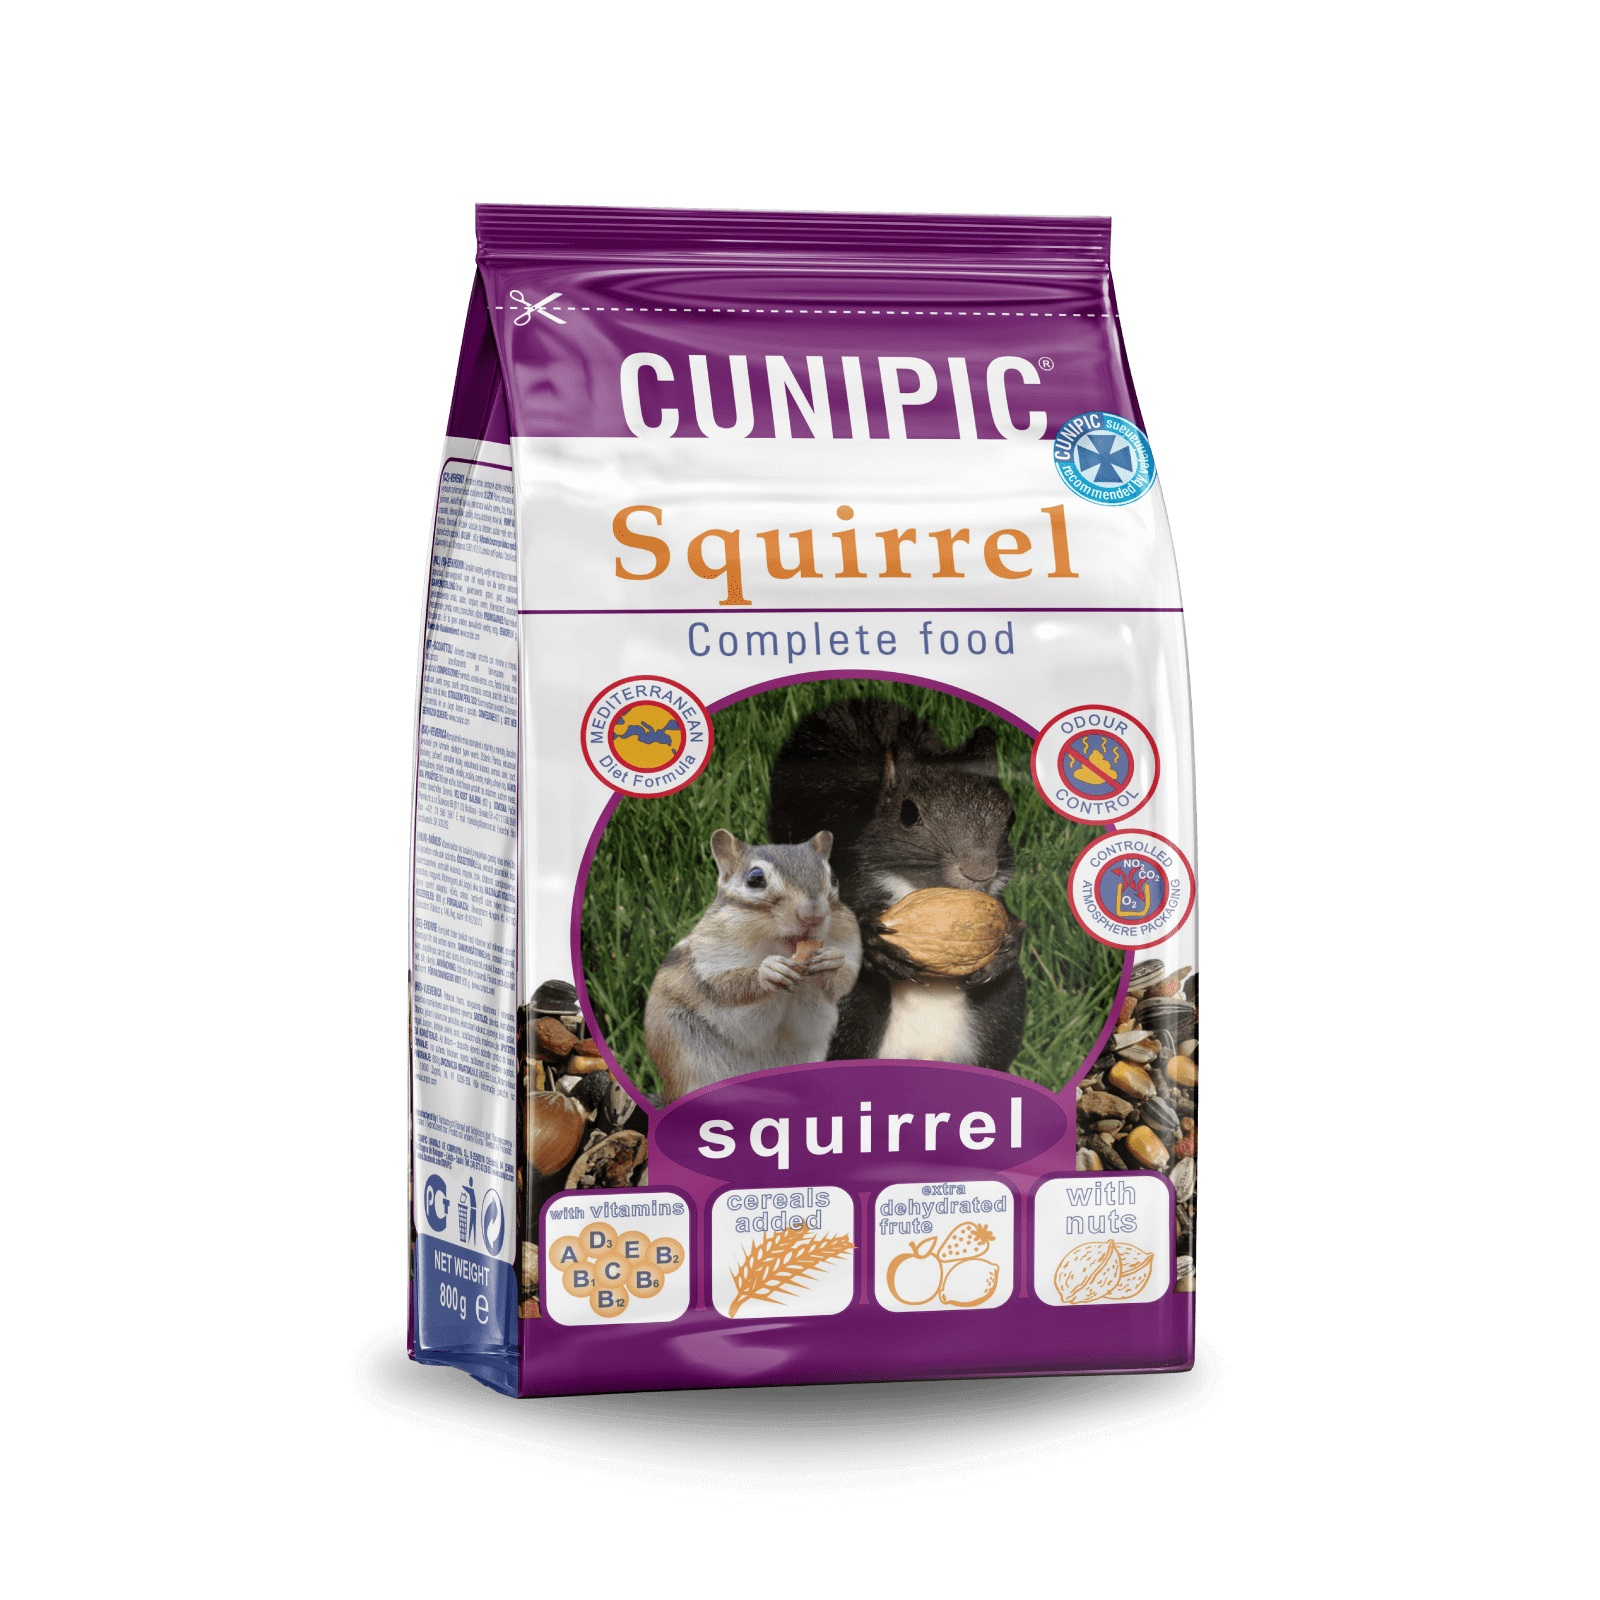 Cunipic Premium Squirrel Alimento completo para ardillas